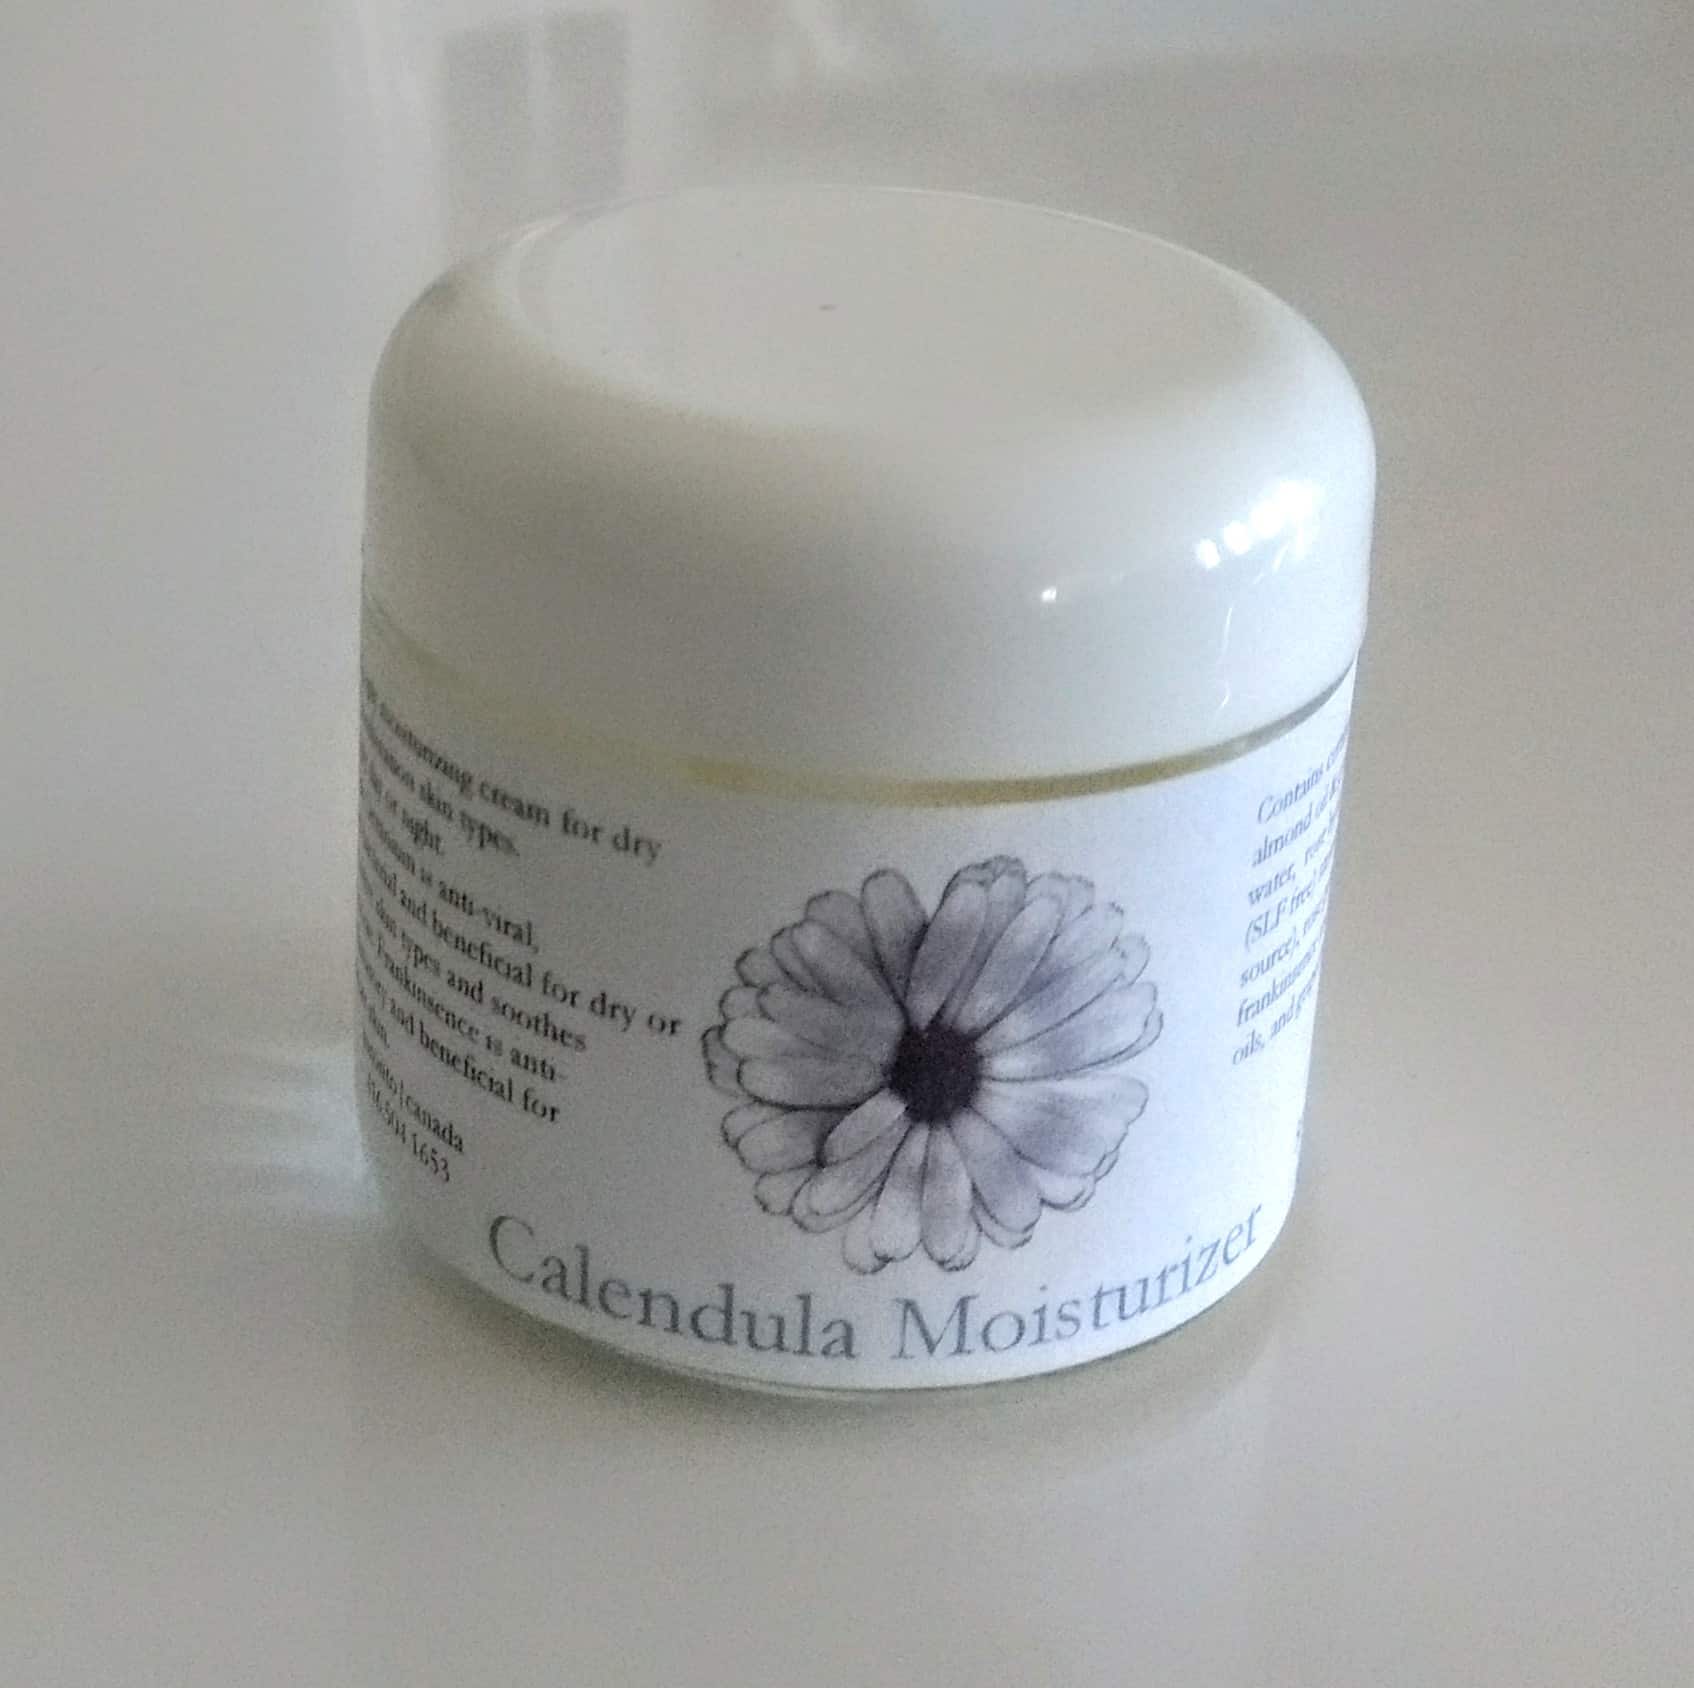 Calendul moisturizer with rose geranium eo